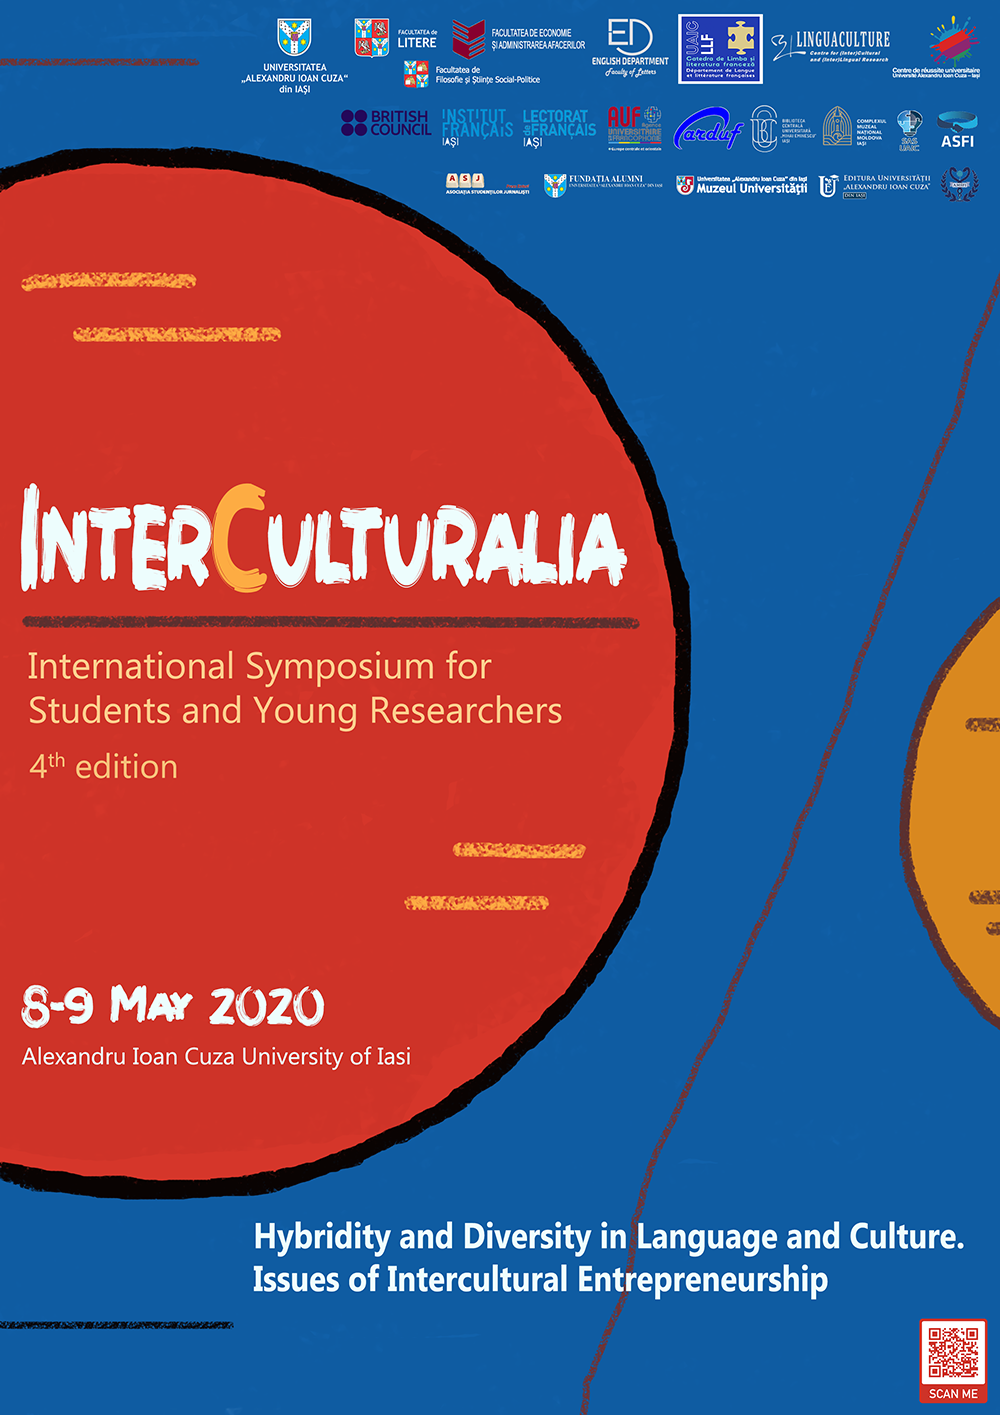 InterCulturalia 2020